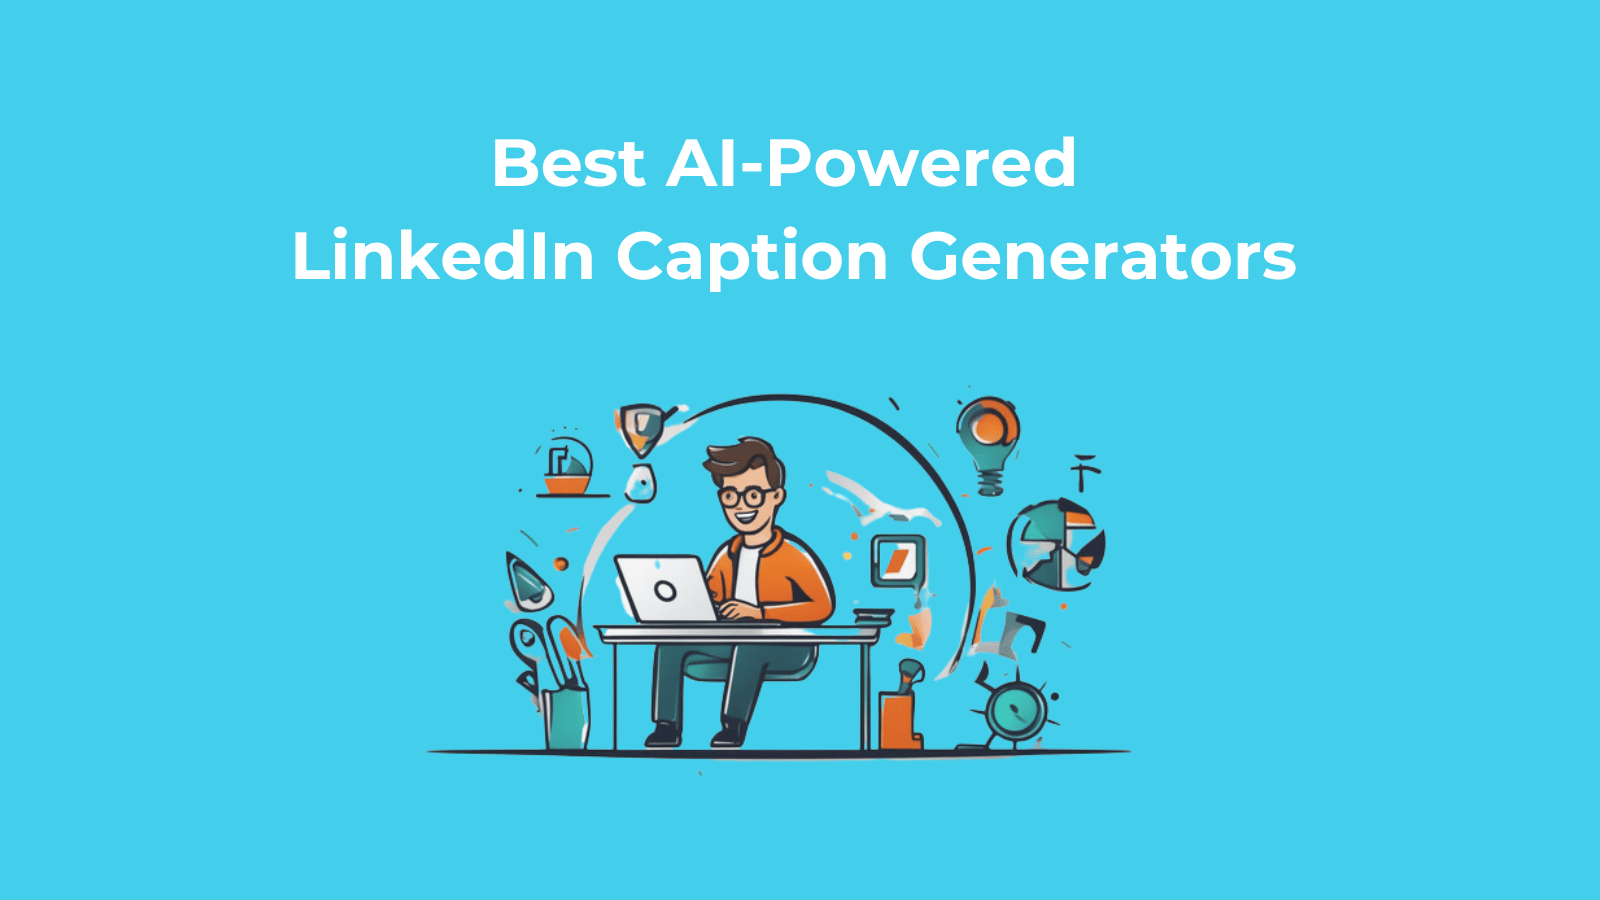 Best AI-Powered LinkedIn Caption Generators